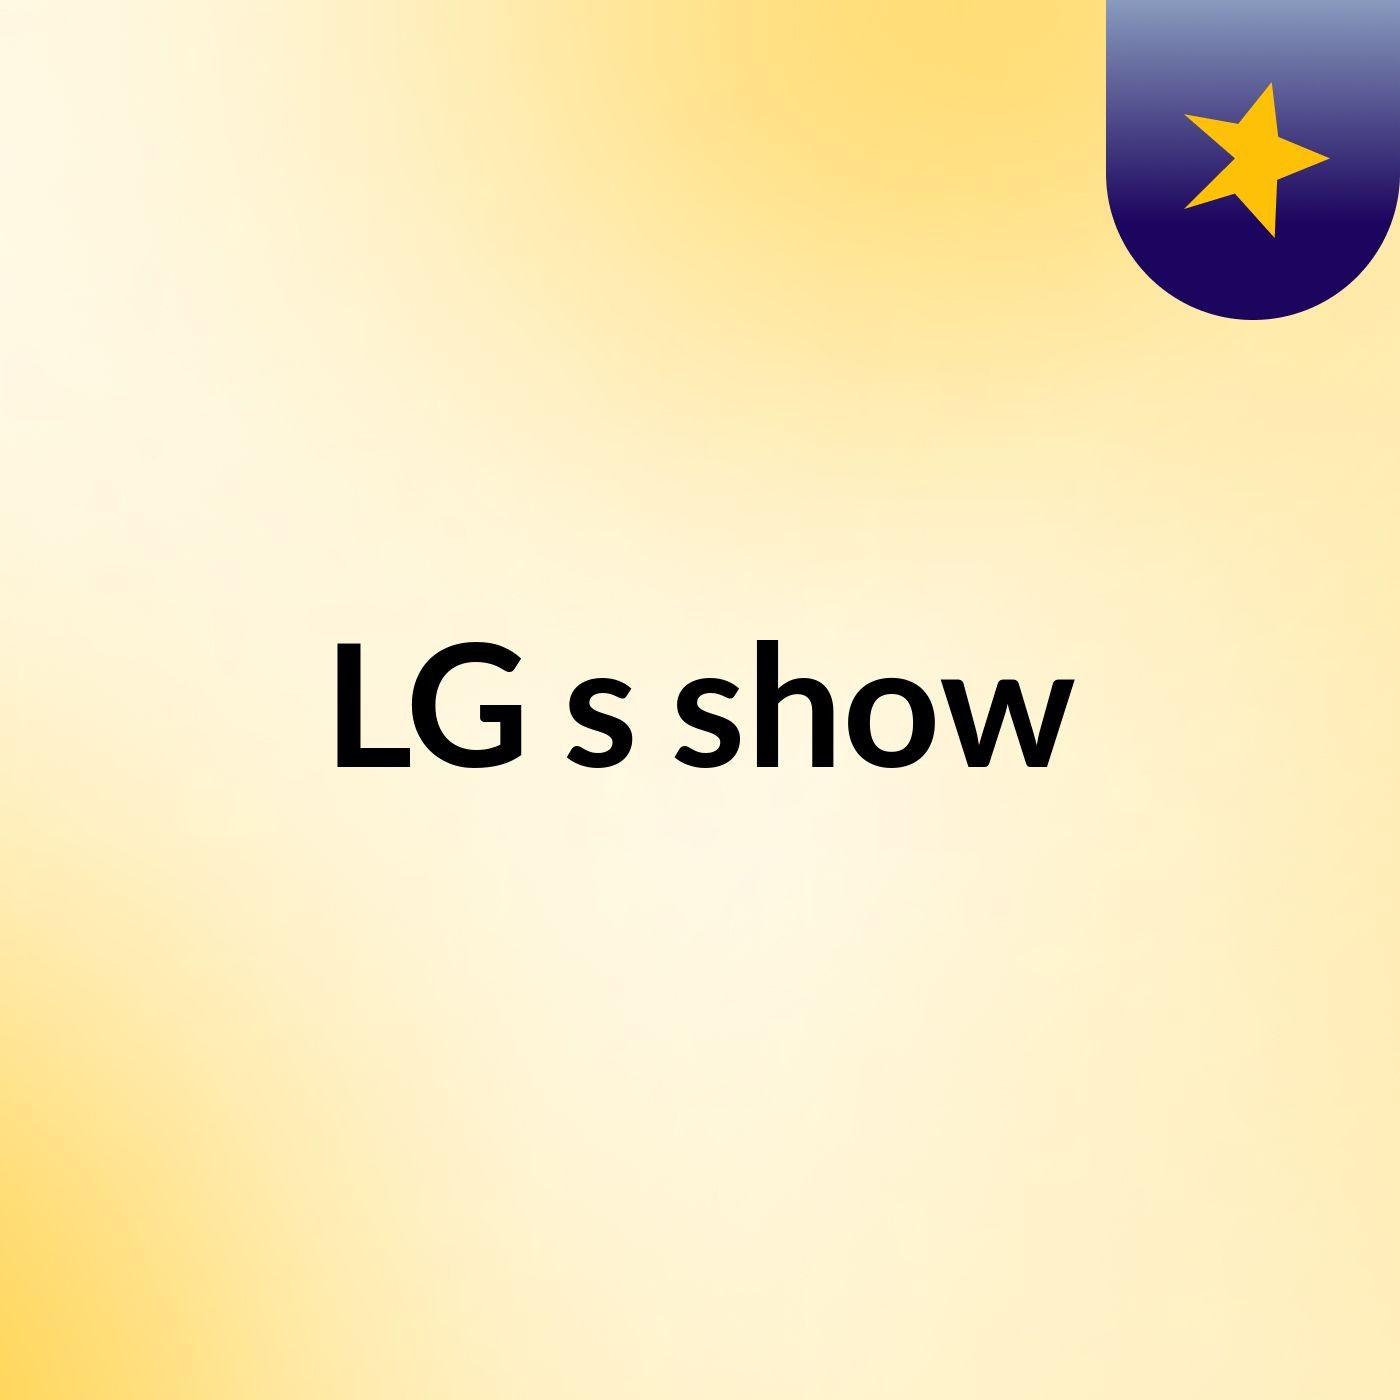 LG's show